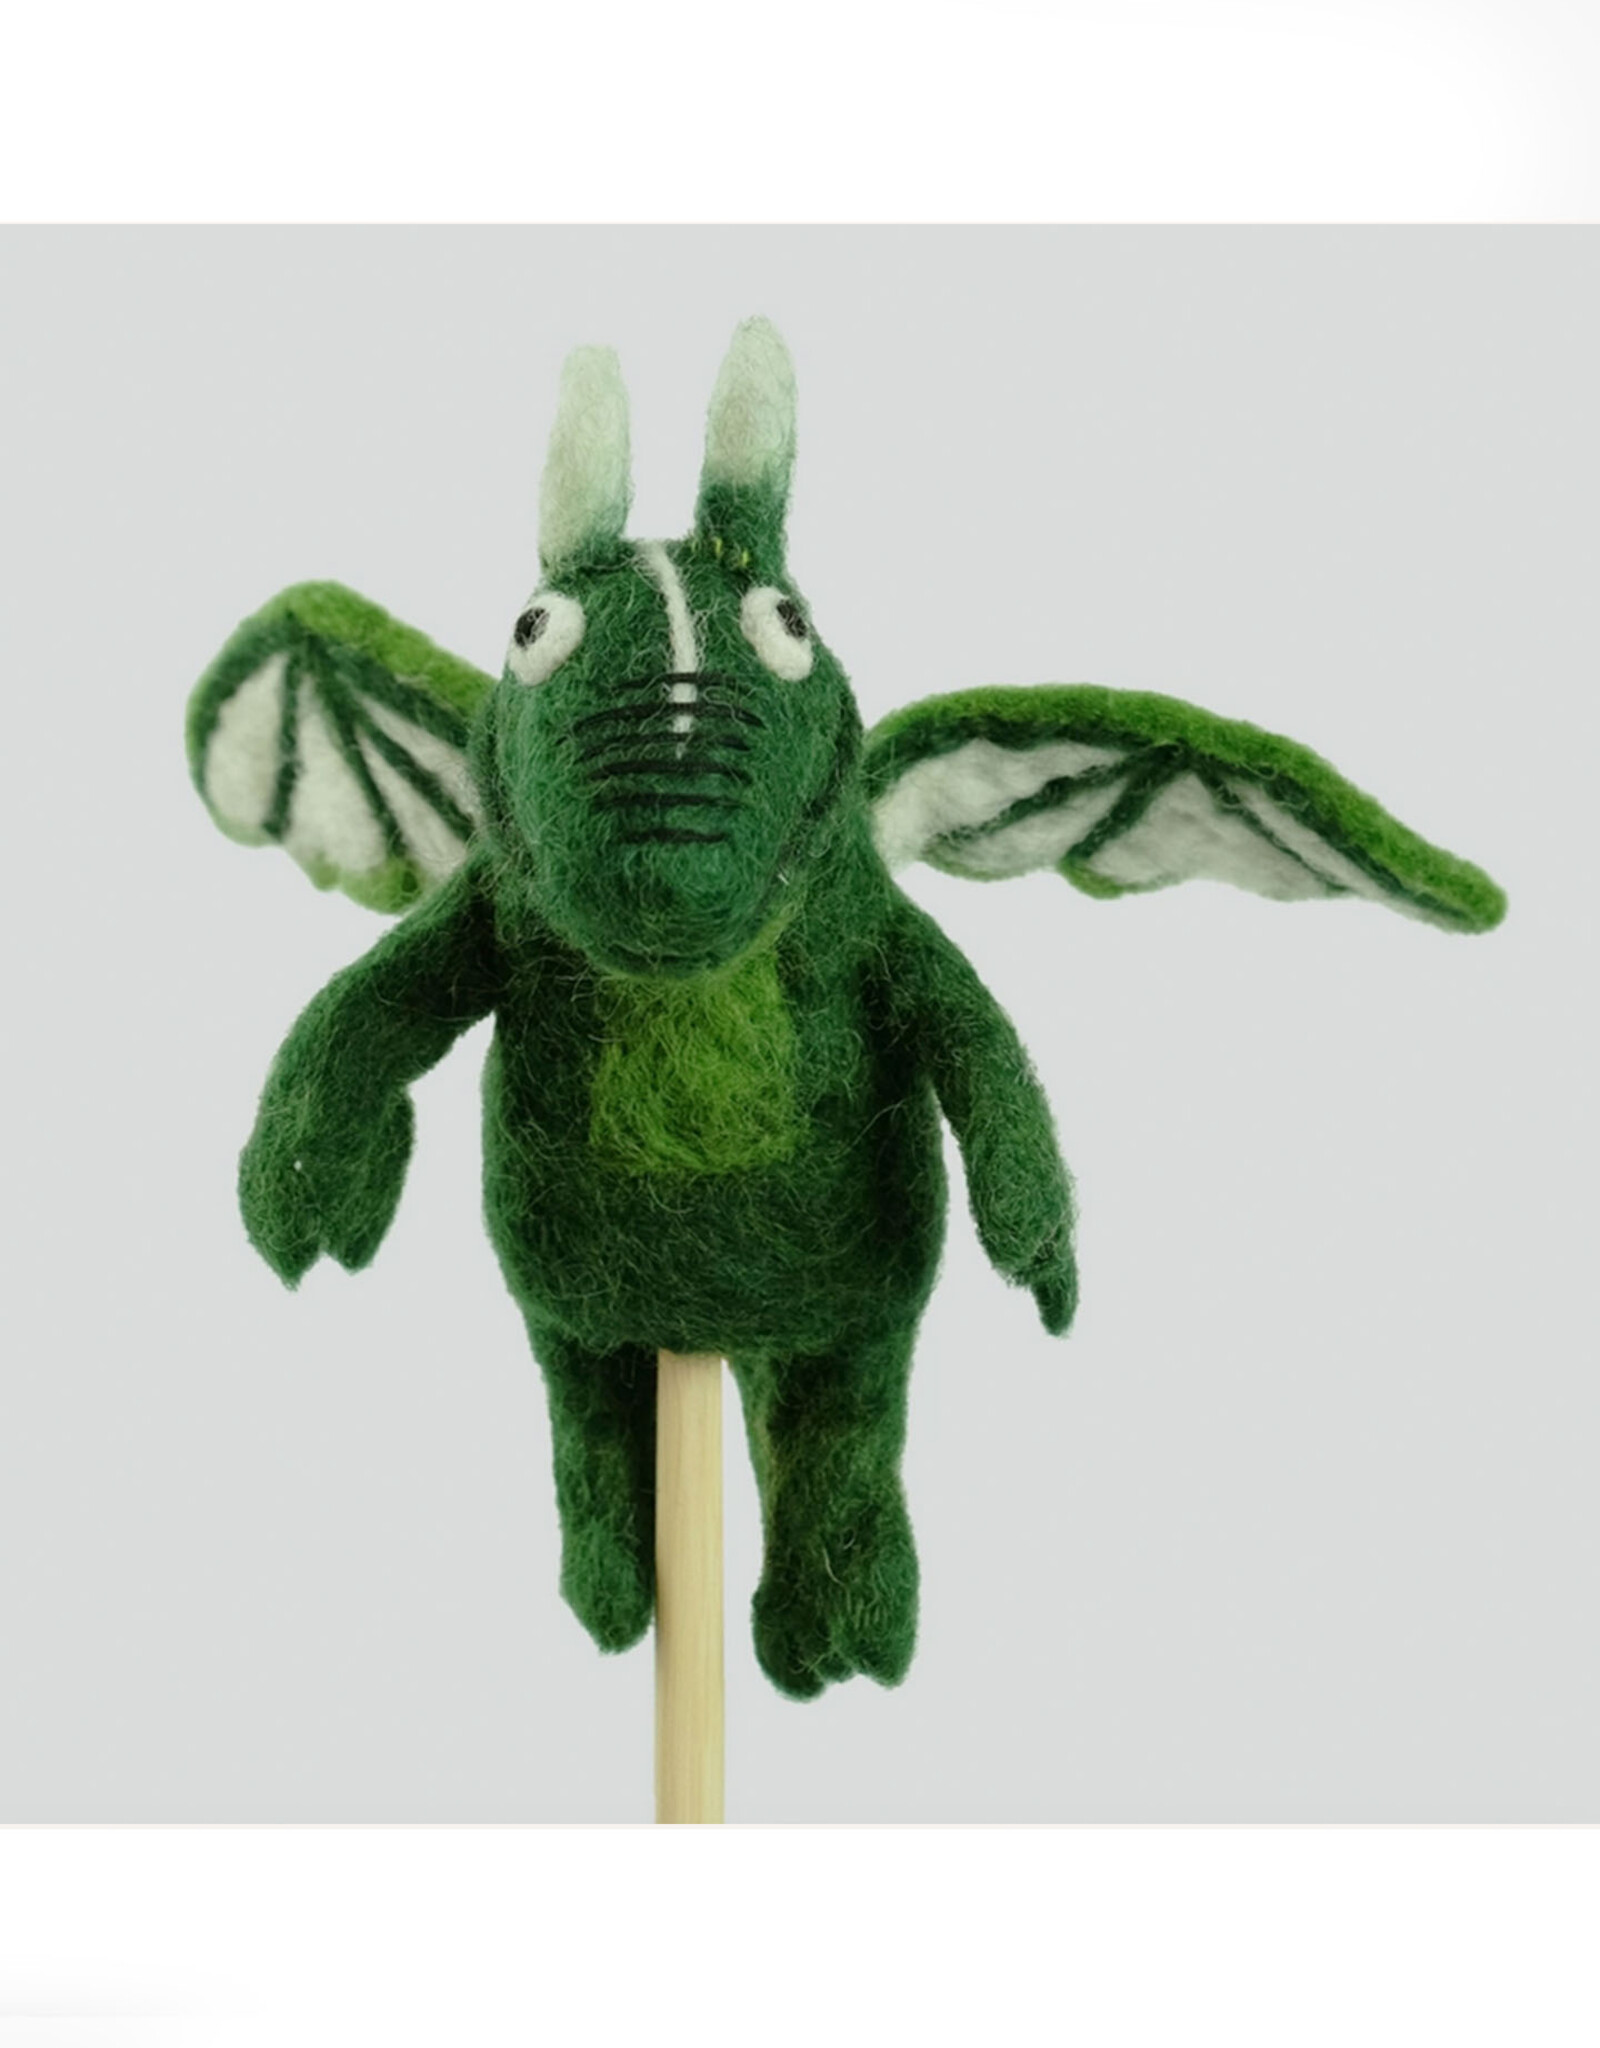 Felt Finger Puppet - Green Dragon